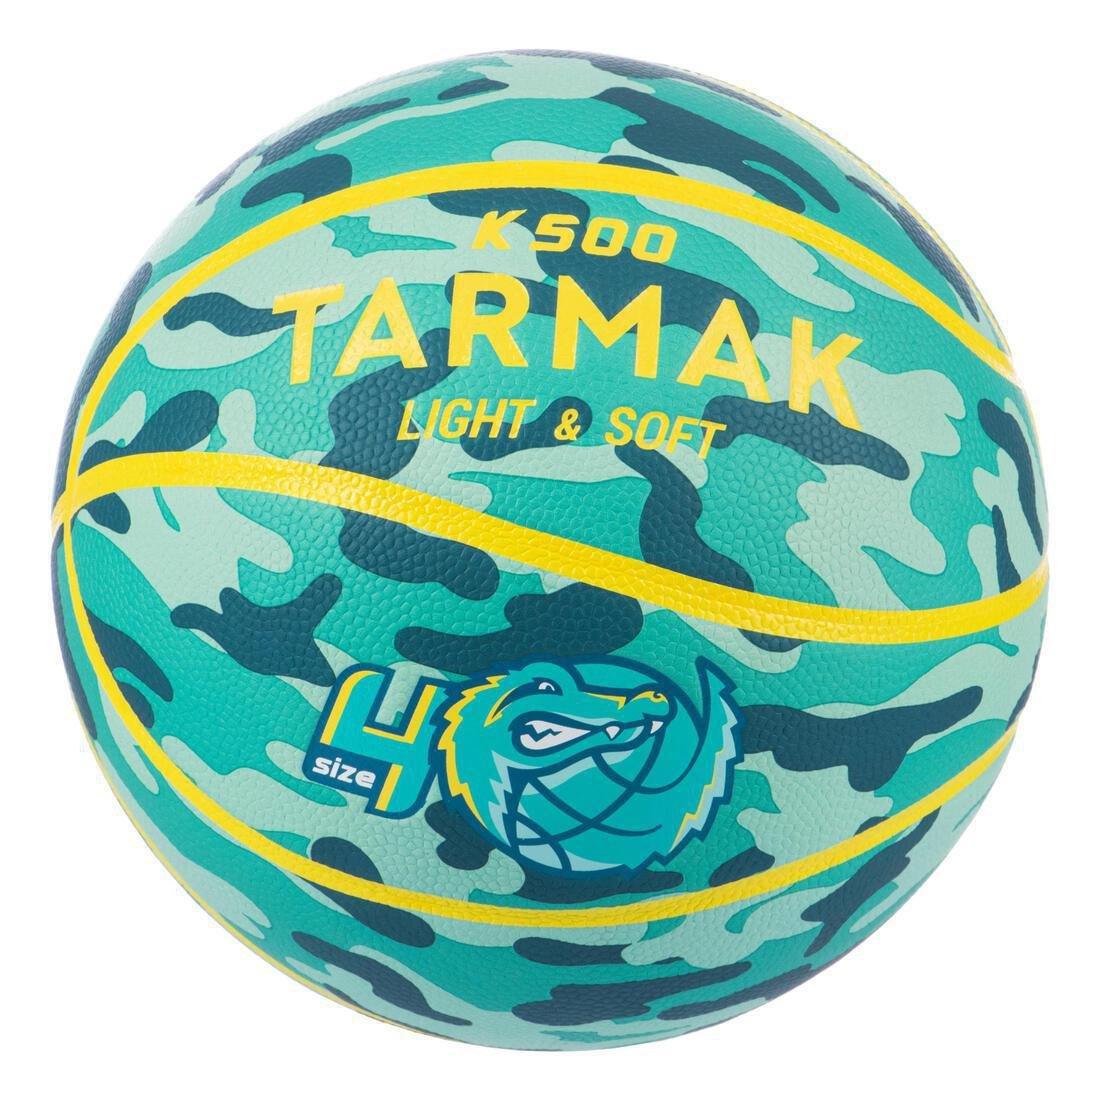 TARMAK - Unisex Kids Basketball - Size 4 K500 Aniball, Blue